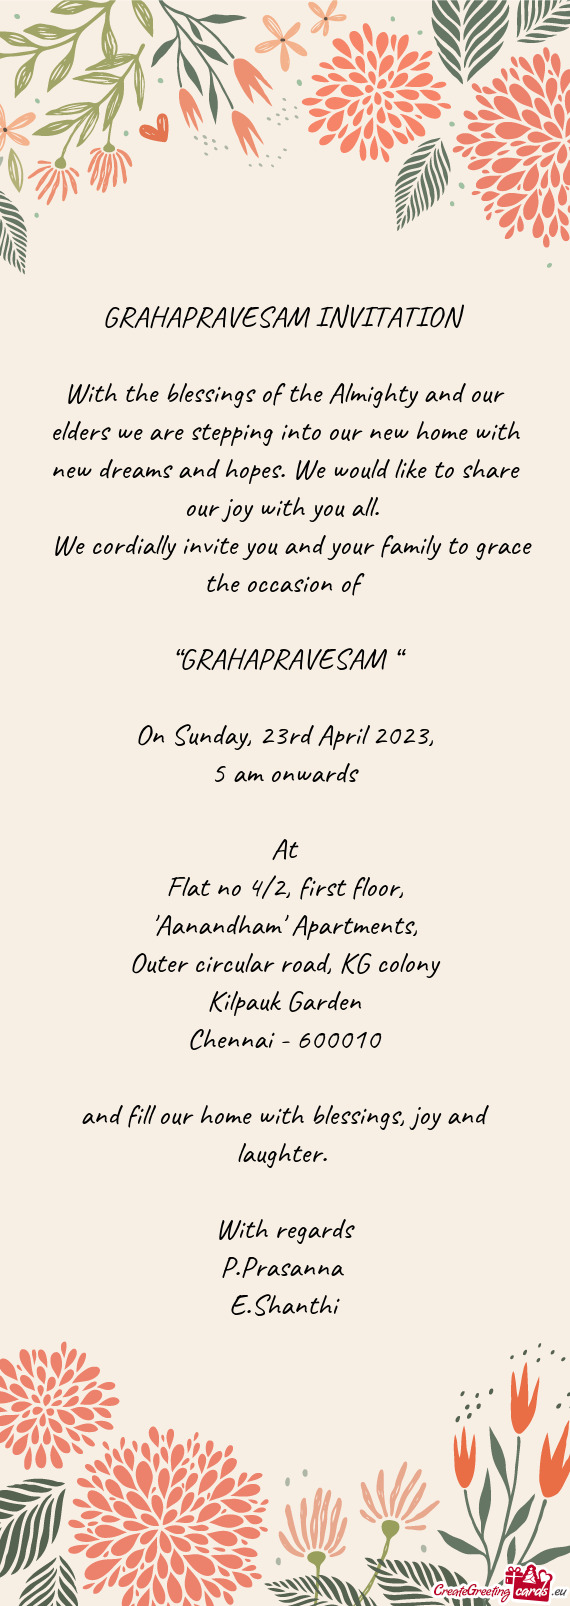 Chennai - 600010